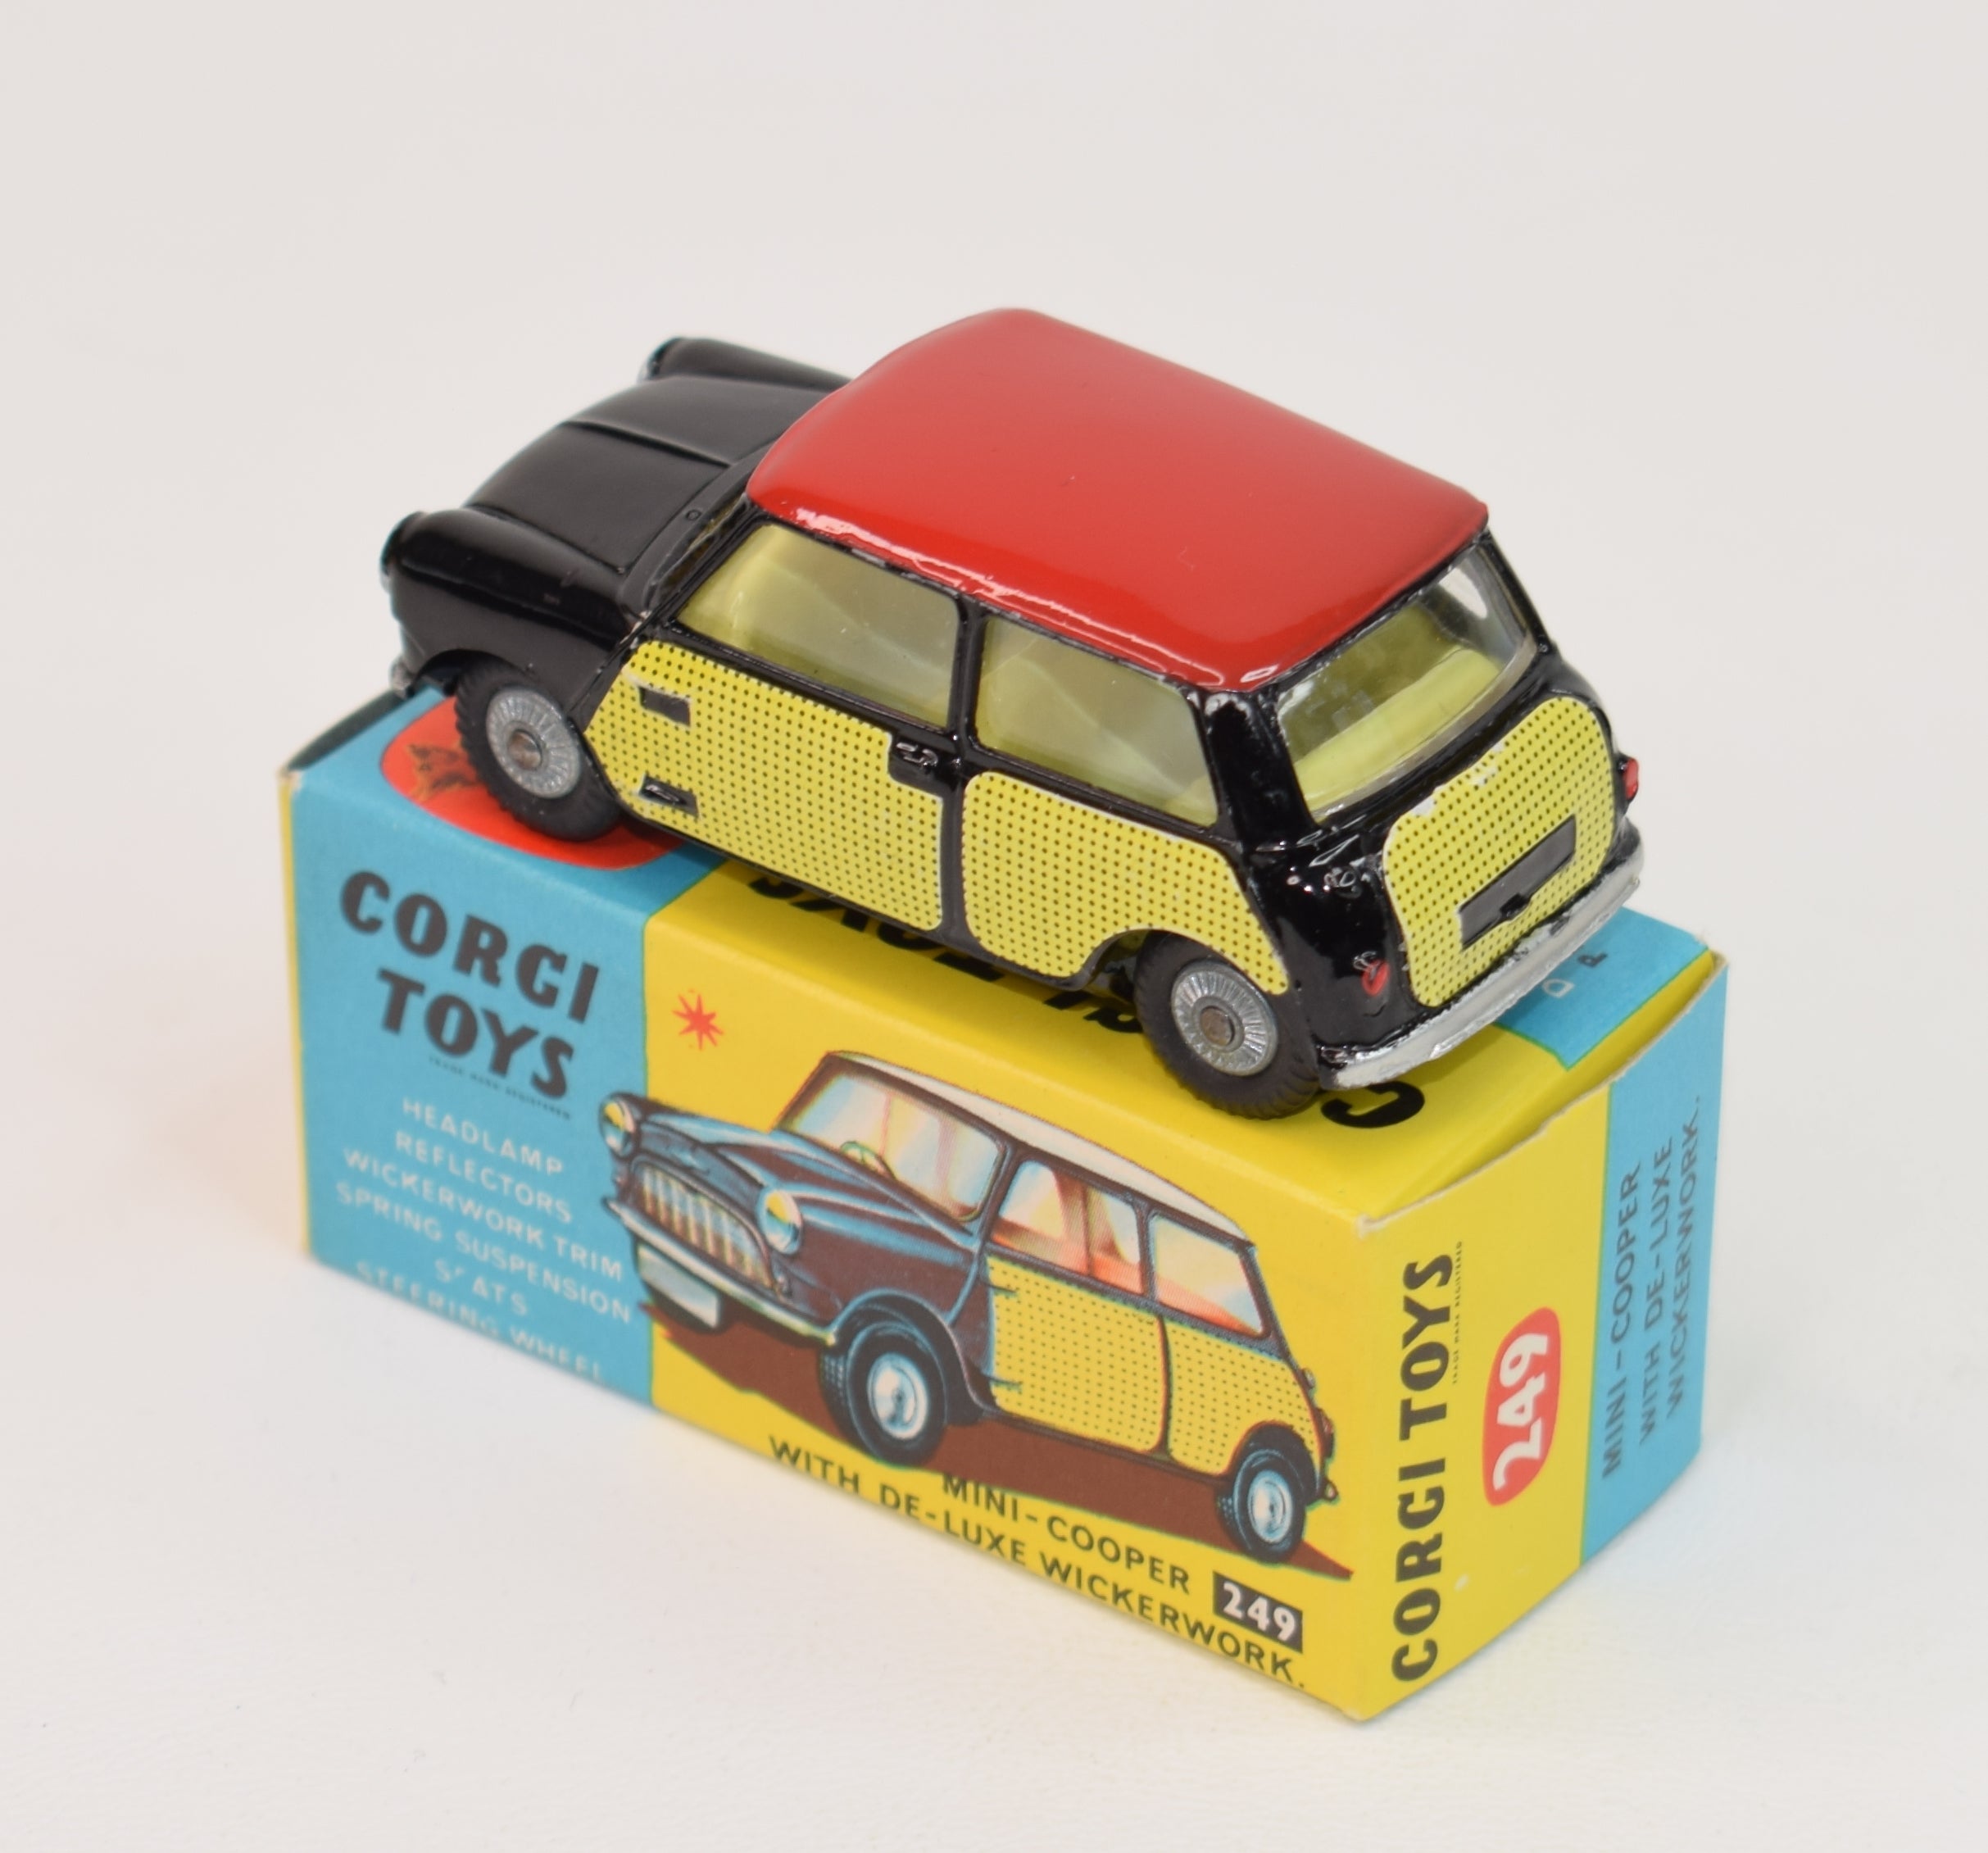 Corgi toys 249 Mini-Cooper Wickerwork (Unsold shop stock quality